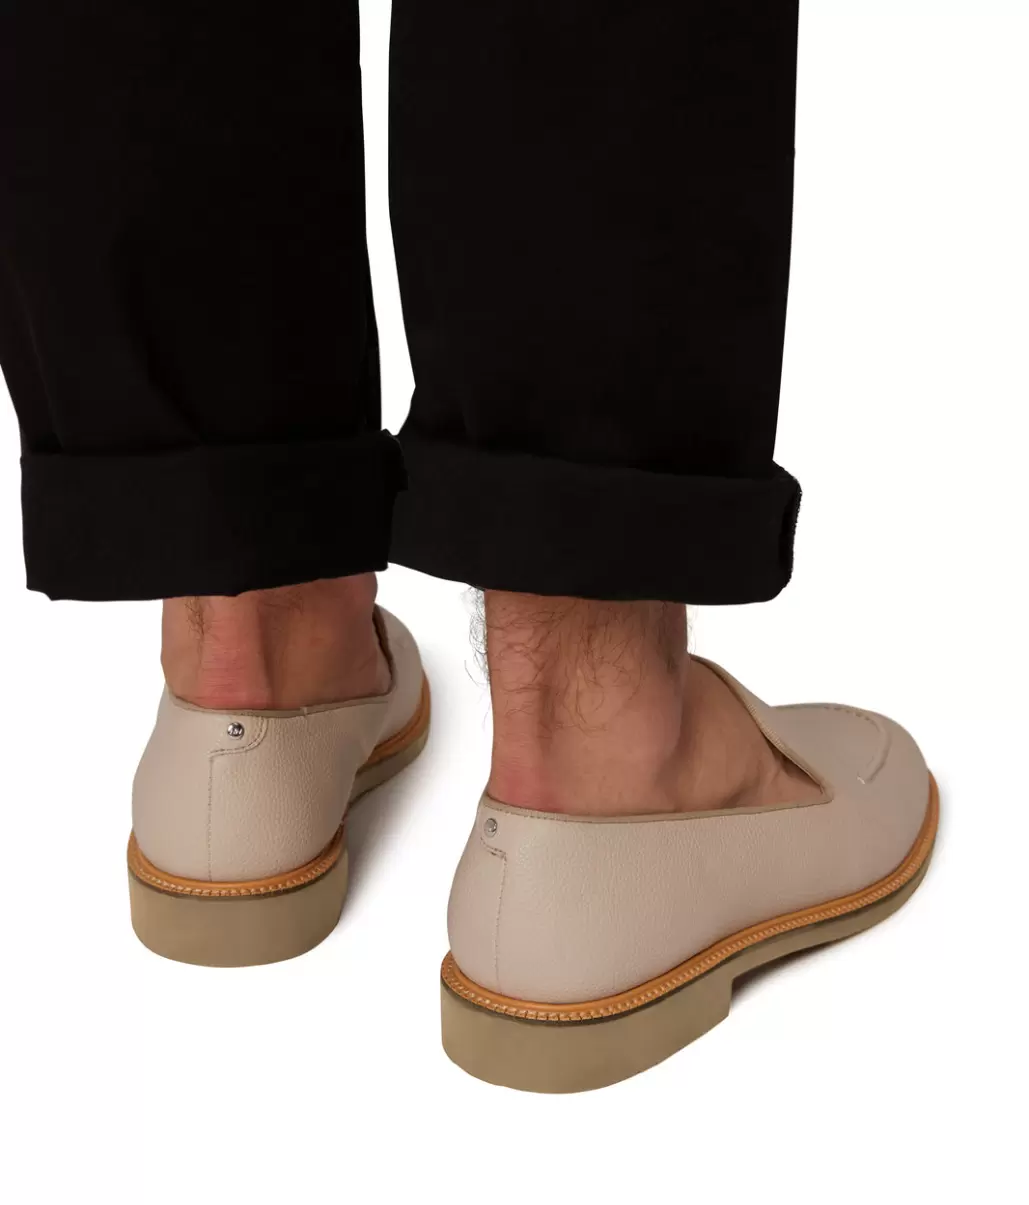 Matt & Nat Limited Time Offer Footwear Altman Men's Vegan Slip On Loafers Men Green - 2